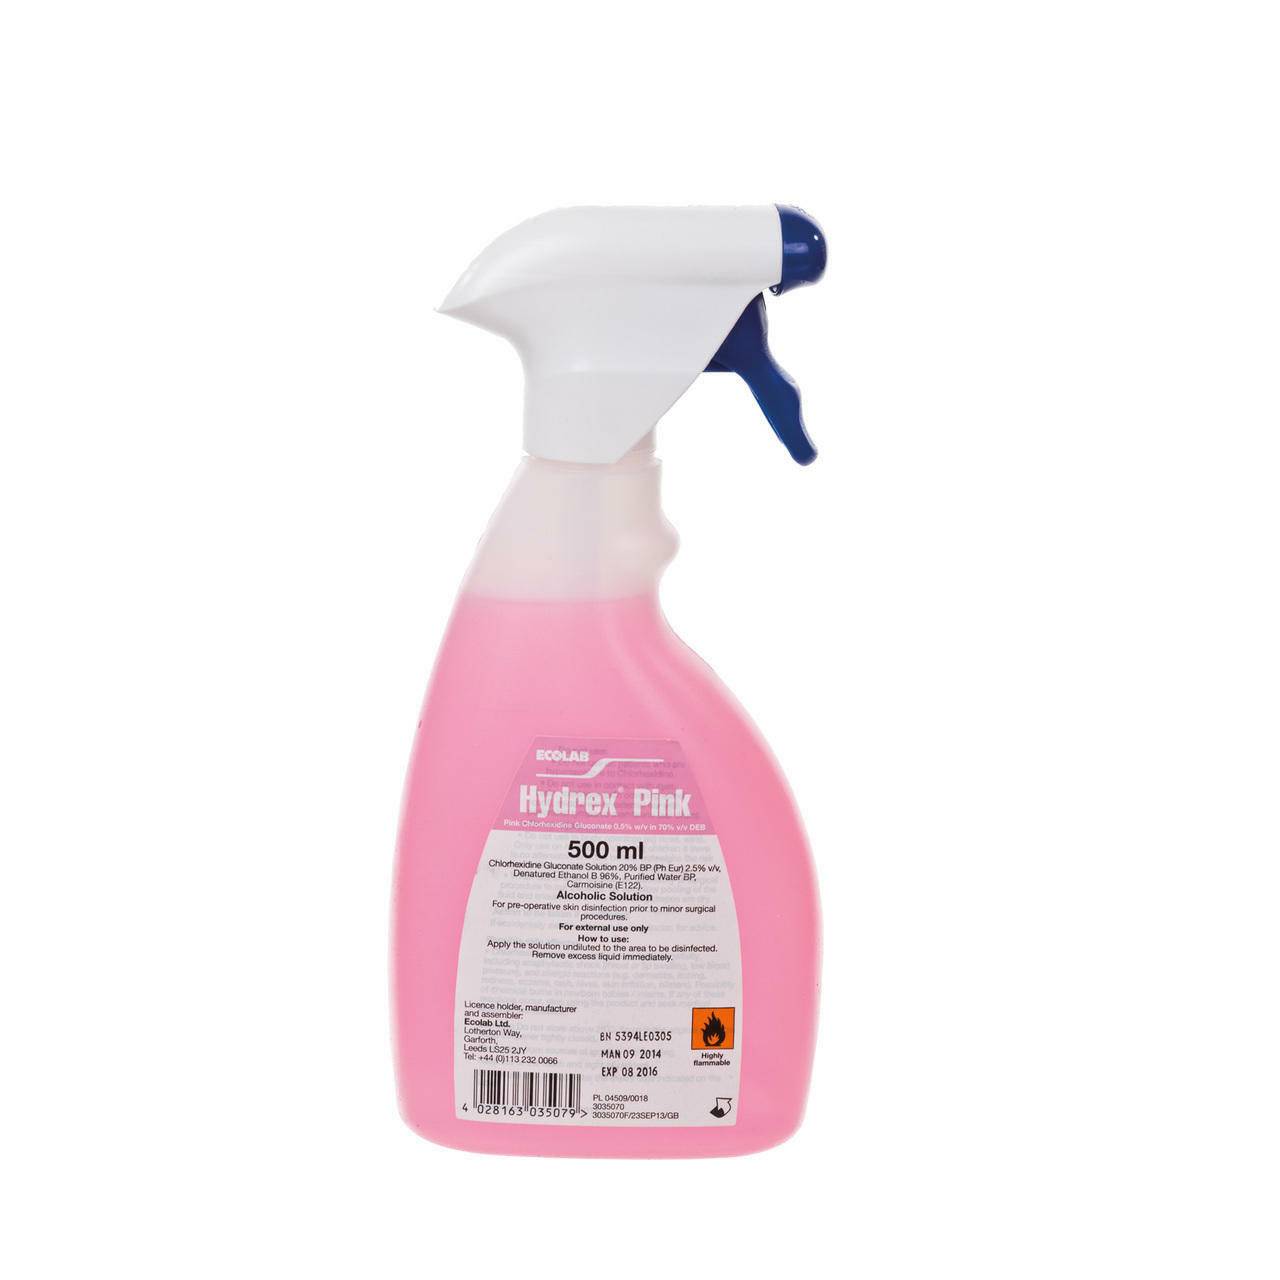 Hydrex Pink Trigger Spray 500ml - UKMEDI